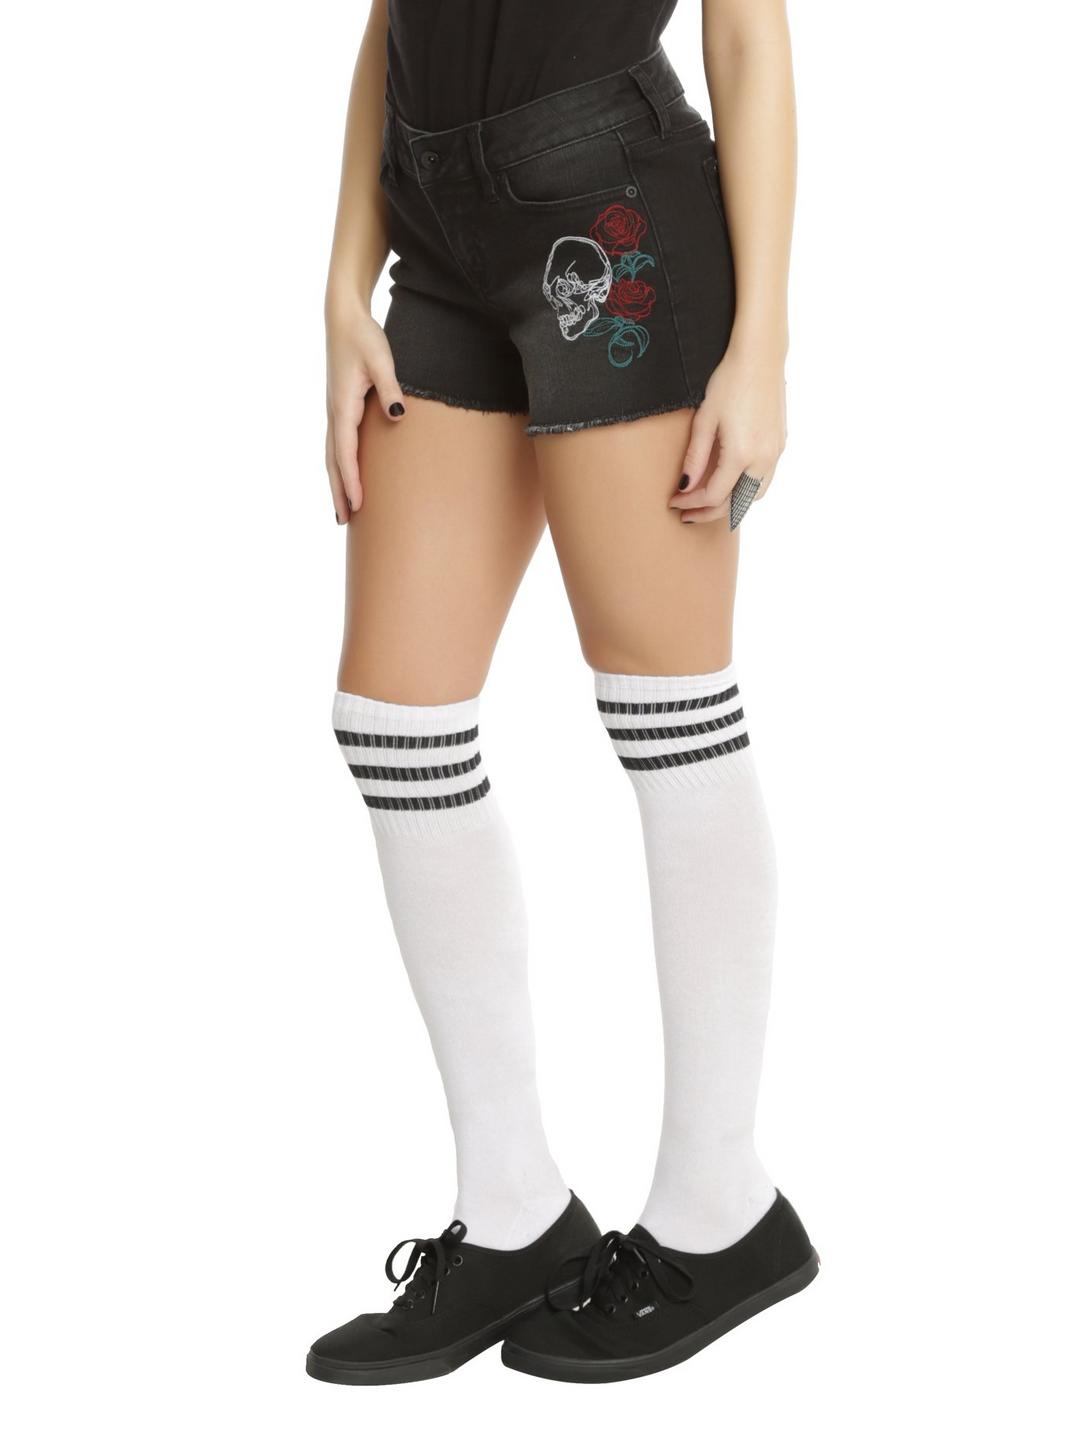 Blackheart Skull & Rose Embroidered Shorts, BLACK, hi-res